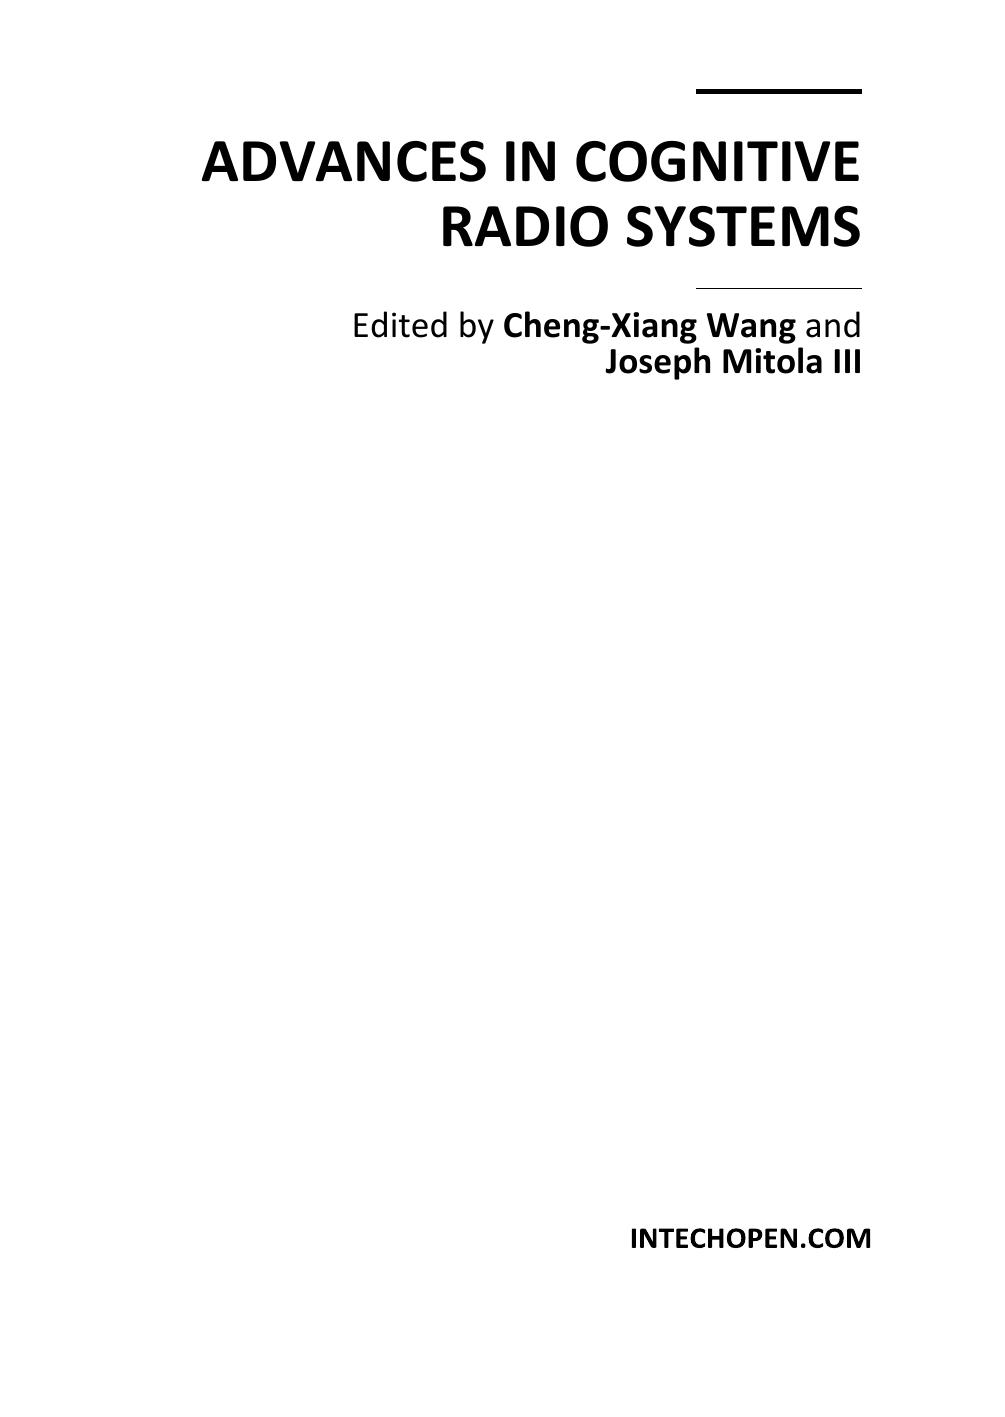 Advances in Cognitive Radio Systems 2012.pdf